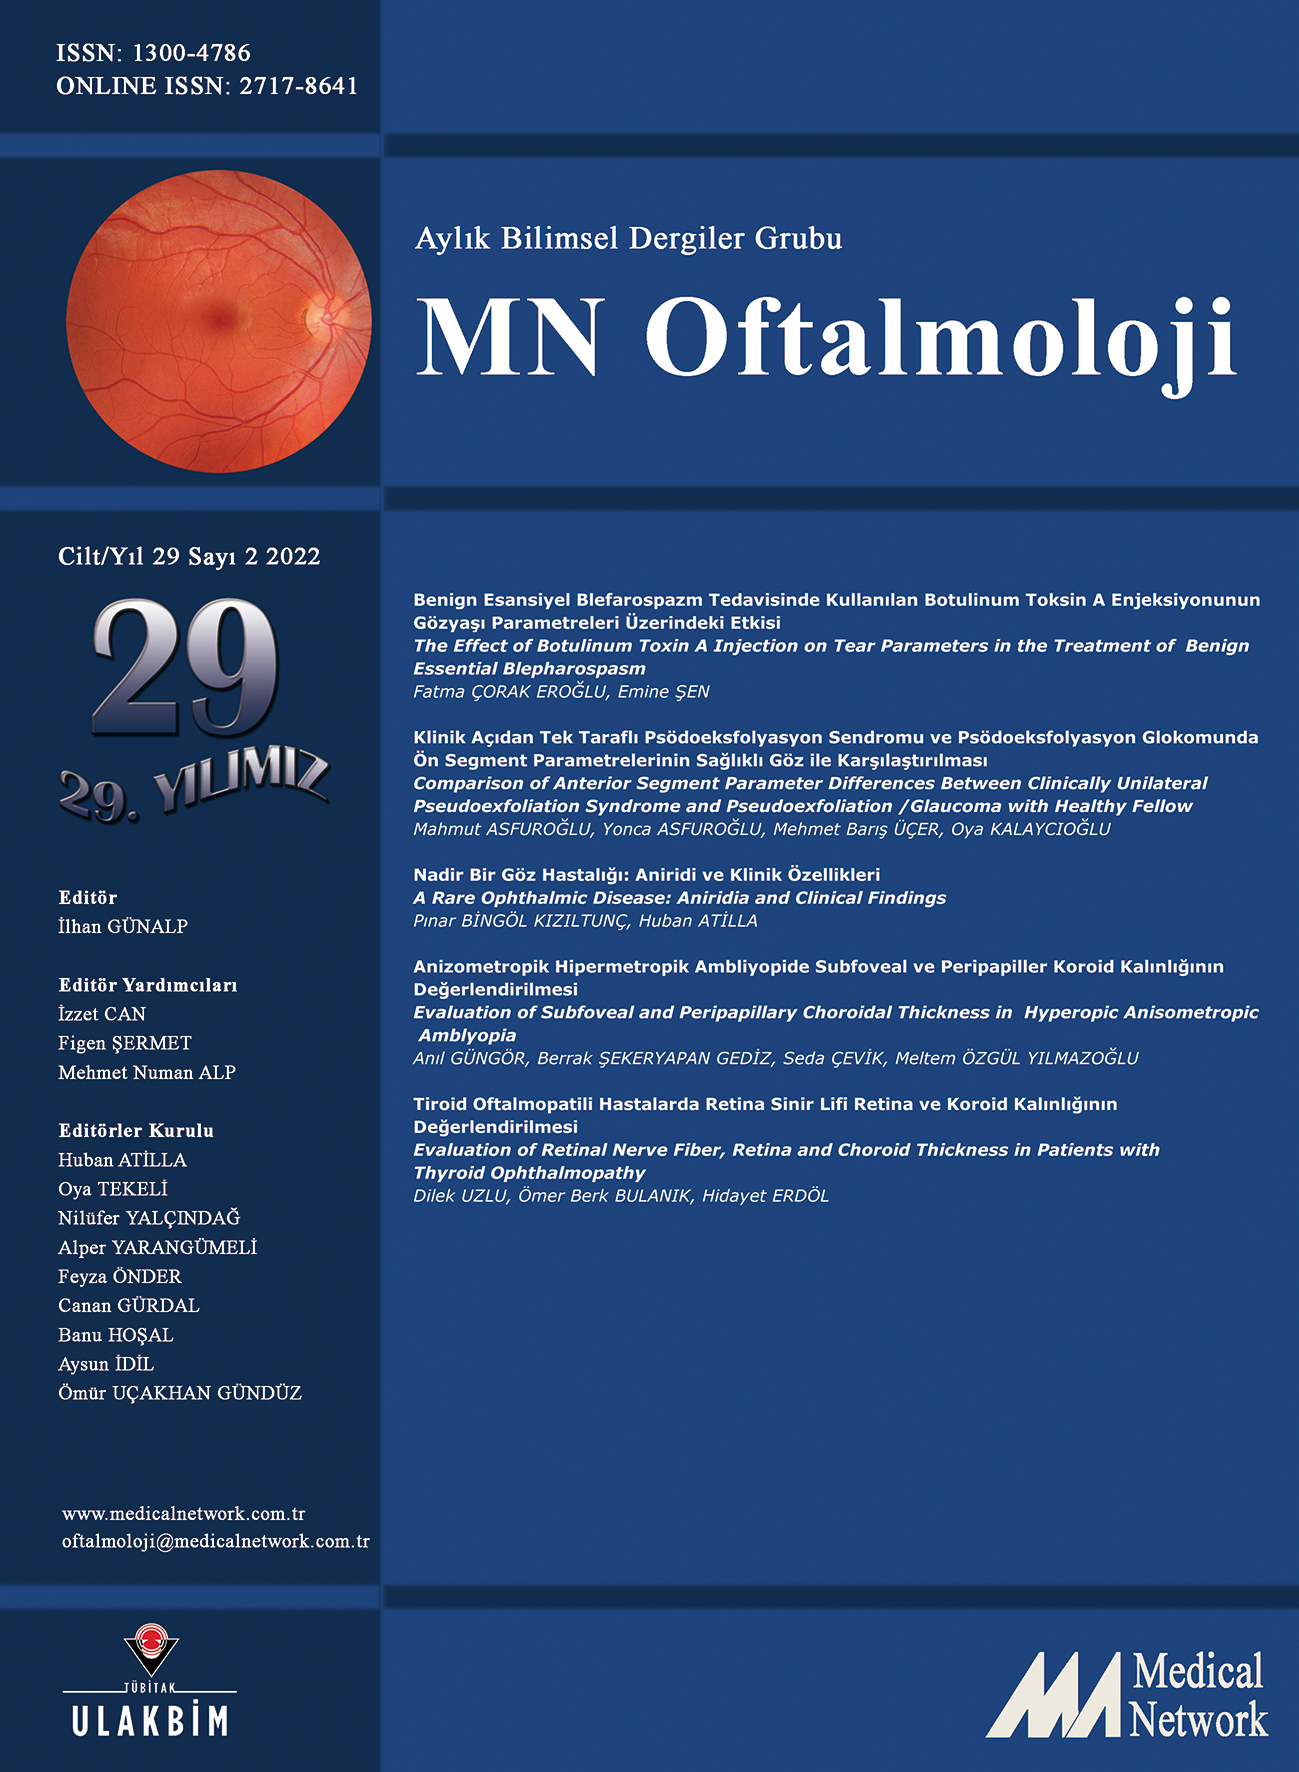 <p>MN Oftalmoloji Cilt: 29 Sayı: 2 2022 (MN Ophthalmology Volume: 29 No: 2 2022)</p>